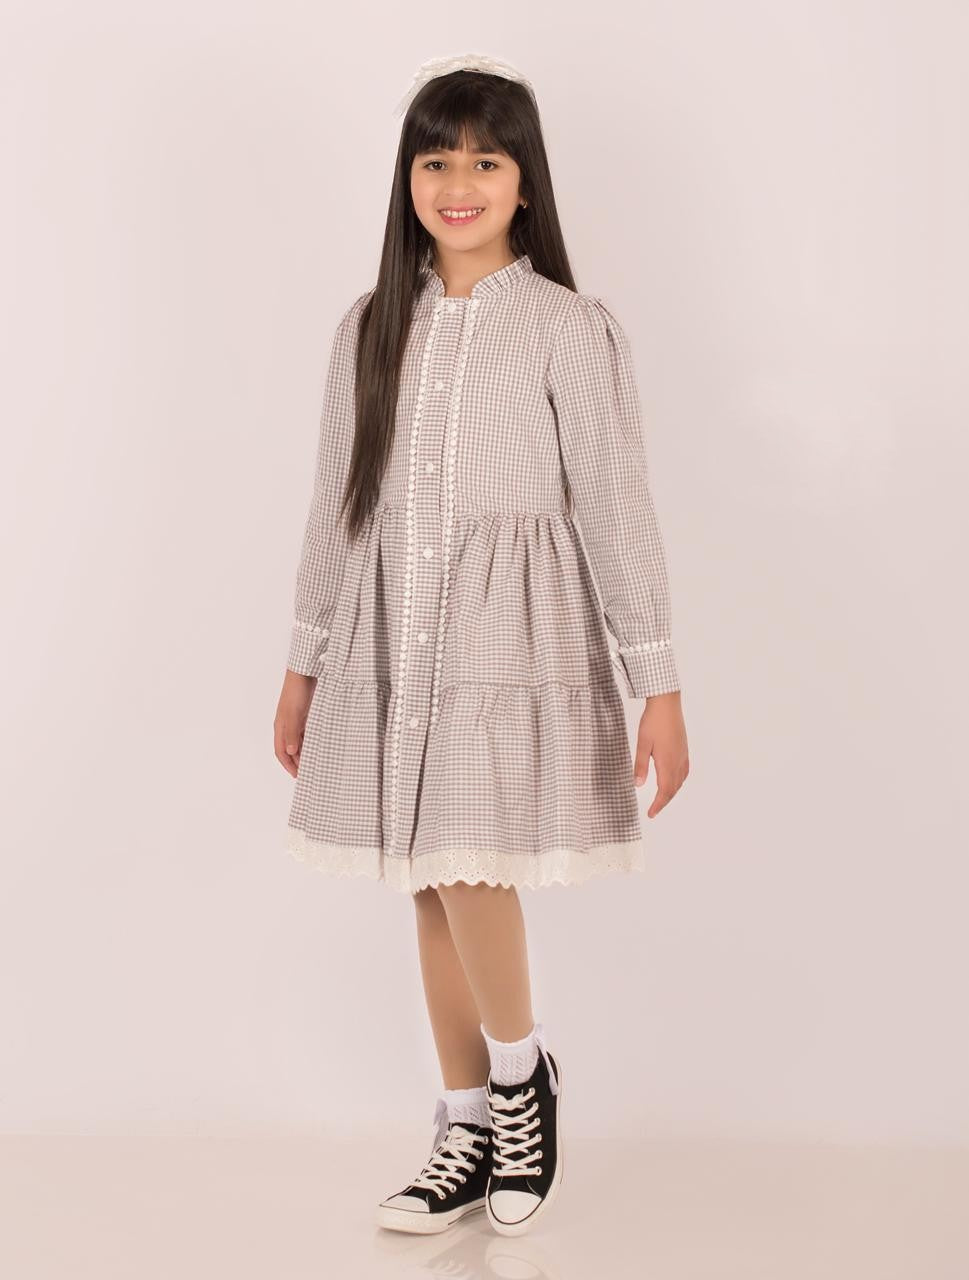 فستان كاروهات رمادي صغير للفتيات